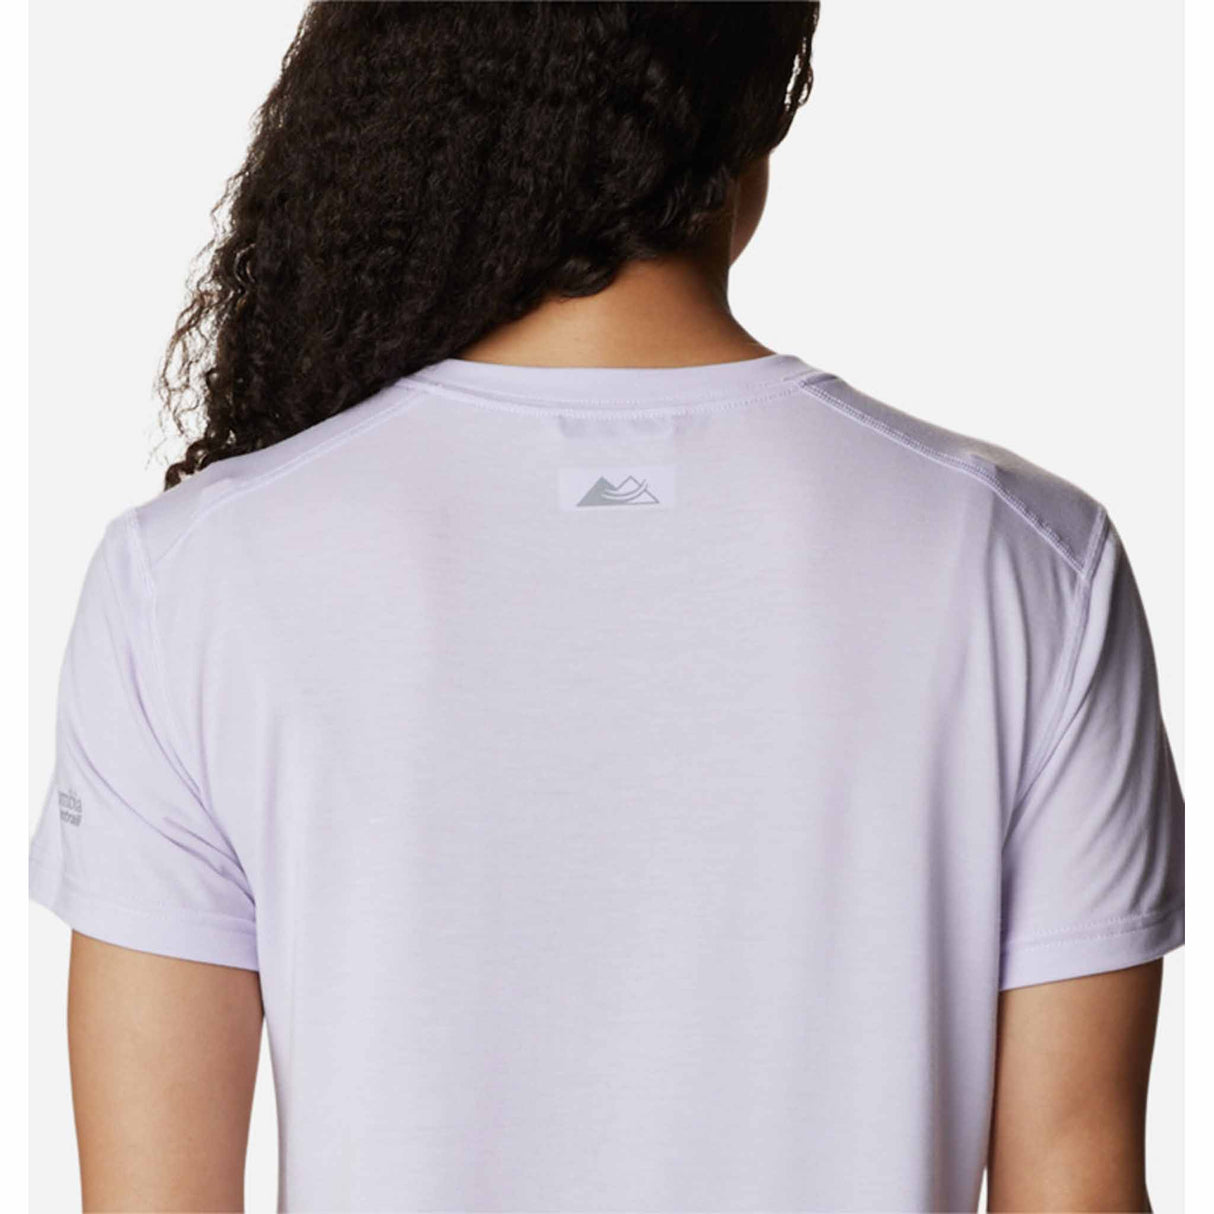 Columbia Endless Running Tech t-shirt manches courtes femme - Purple Tint